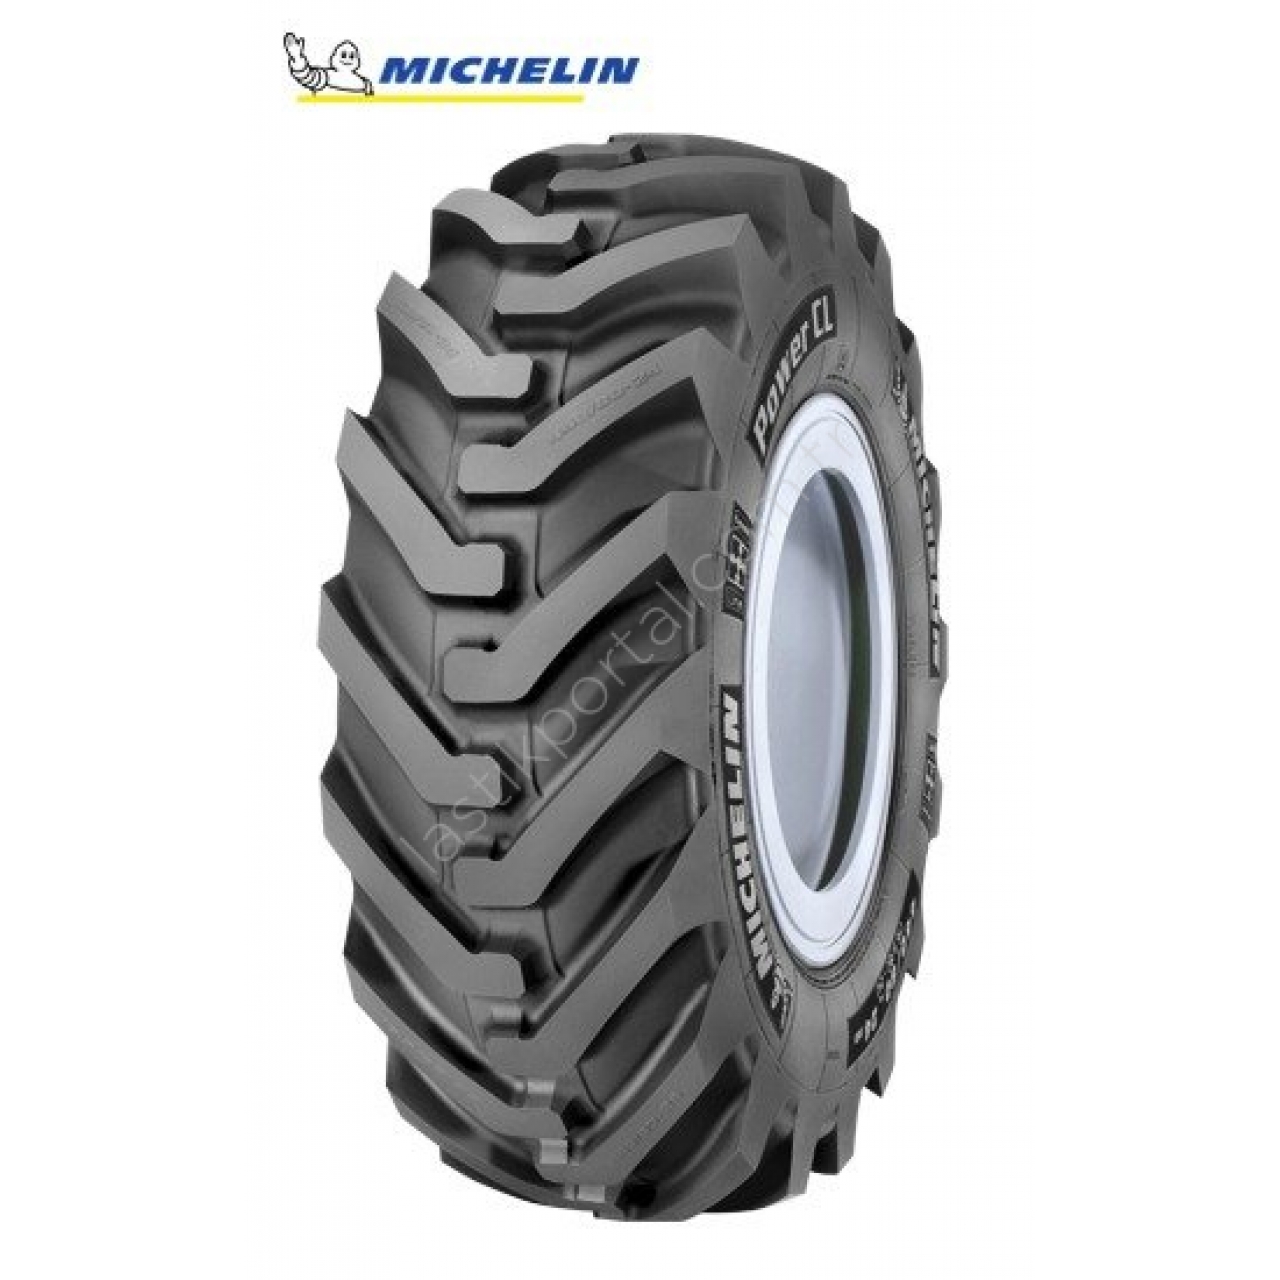 340/80-20 Michelin Power CL 144A8 (12.5/80-20)